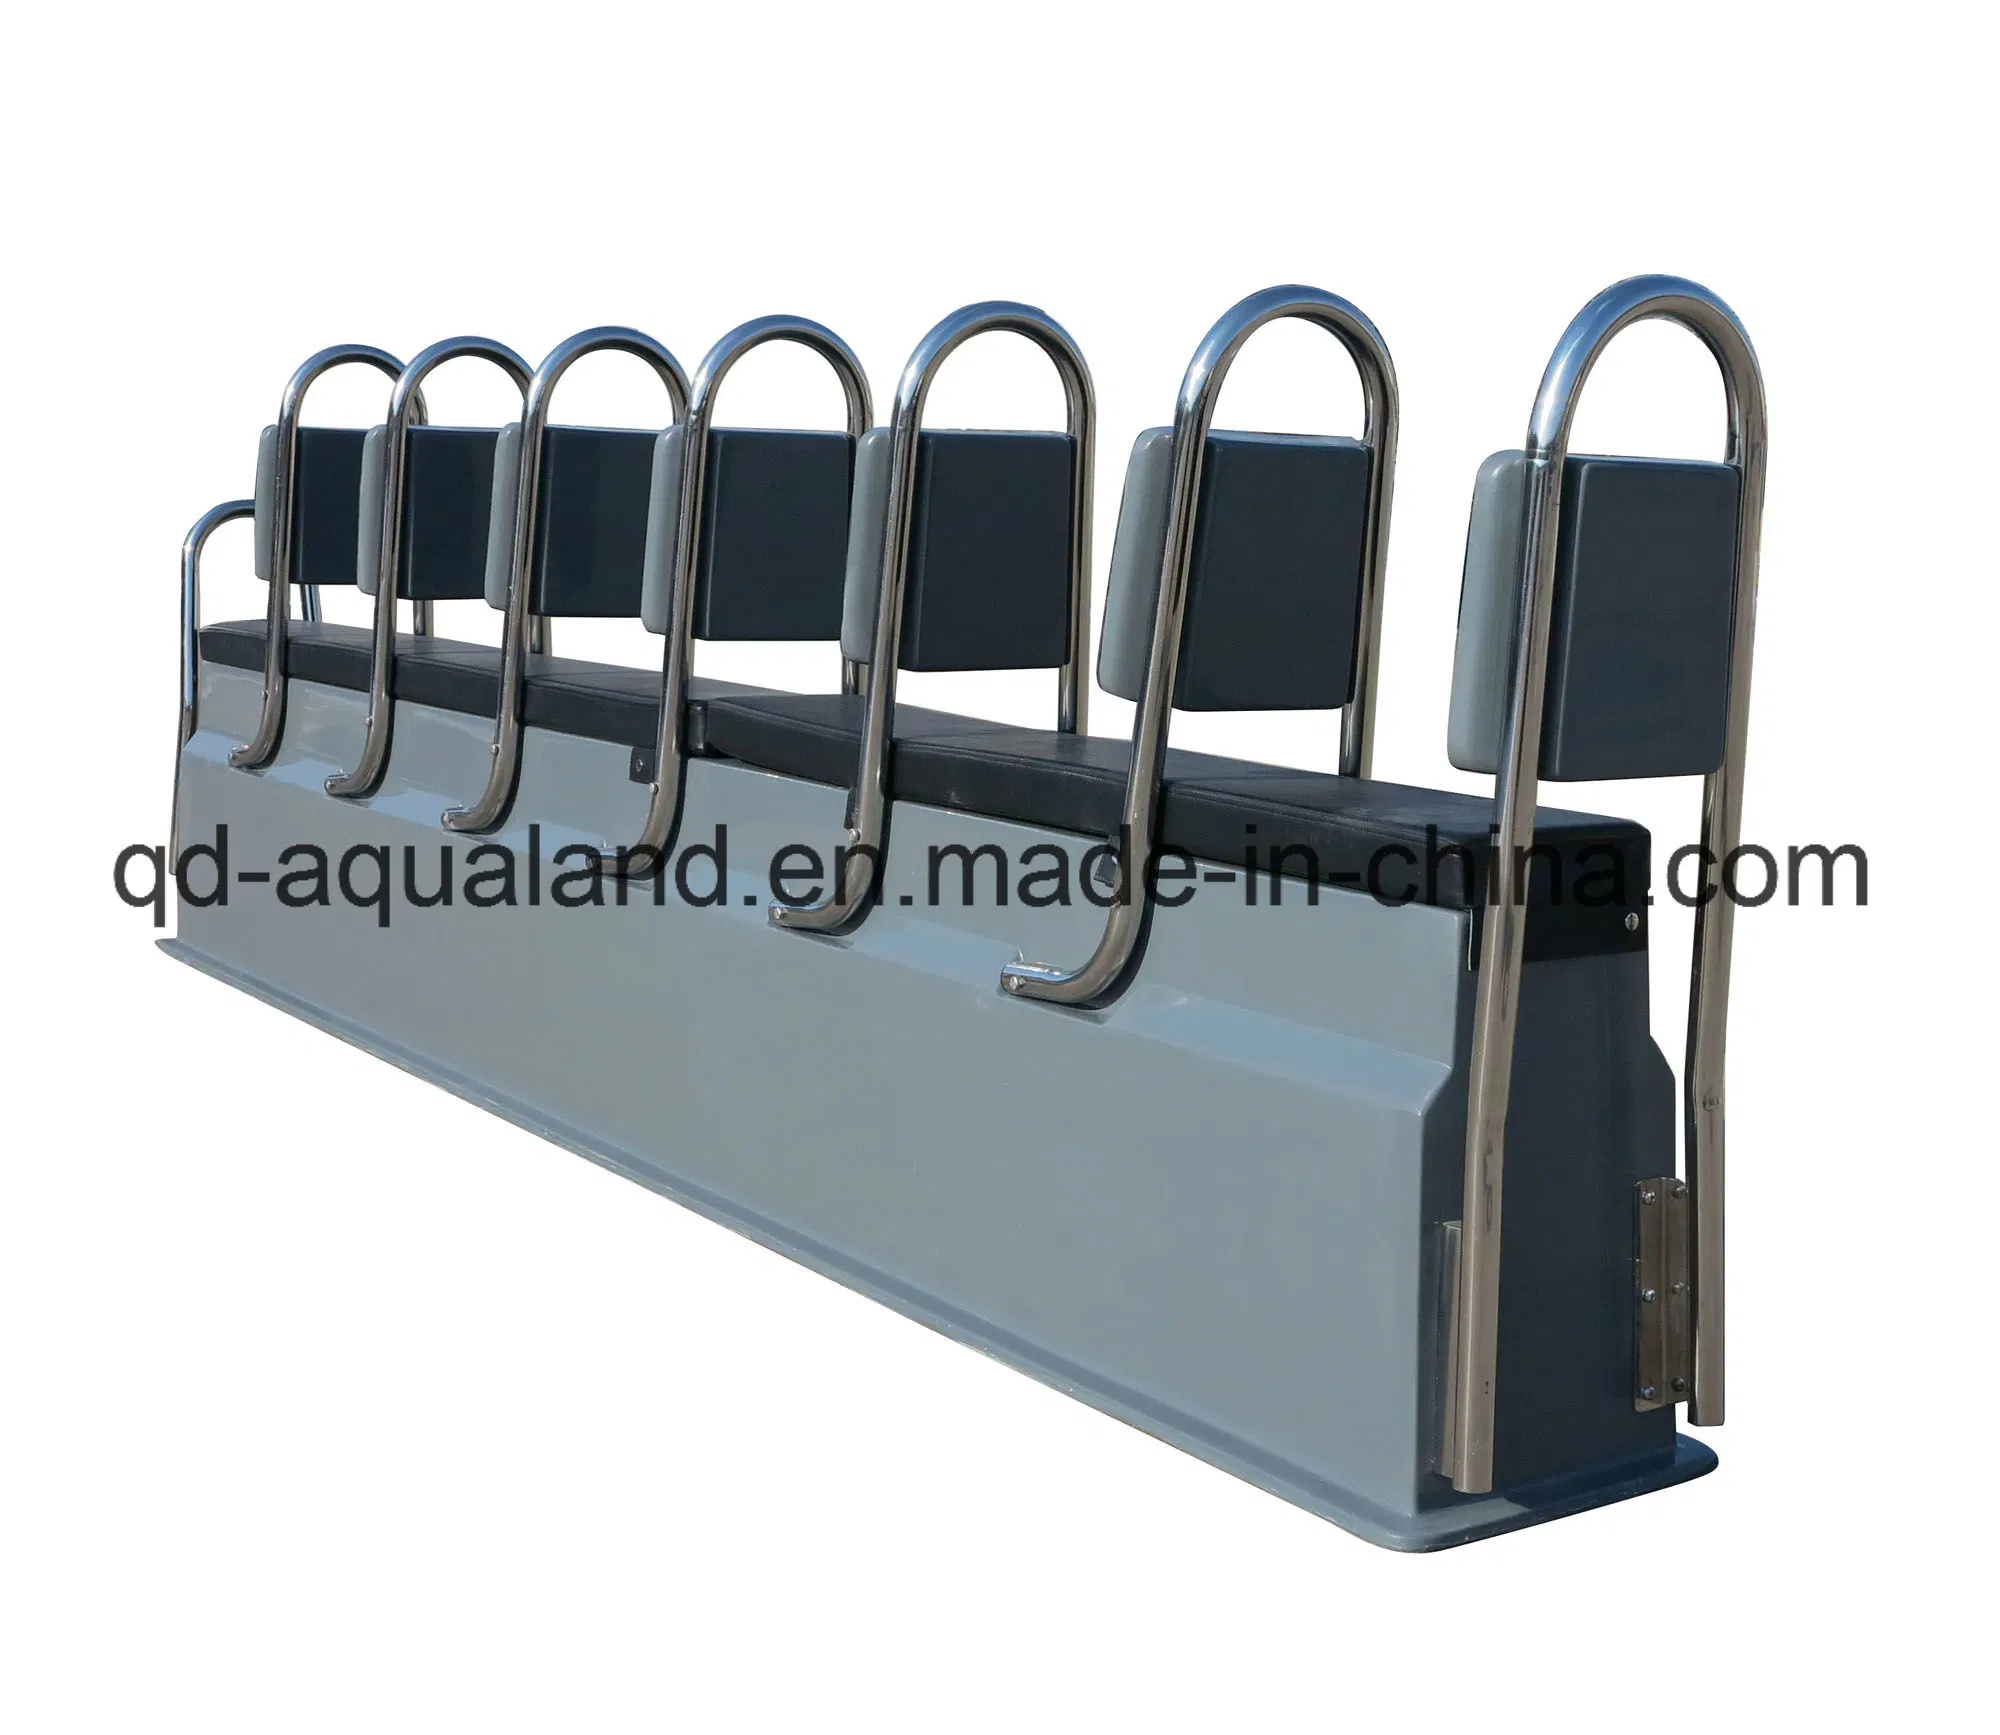 Aqualand barco de fibra de vidrio Accesorios Jocky largo asiento/Asientos Barco Rib